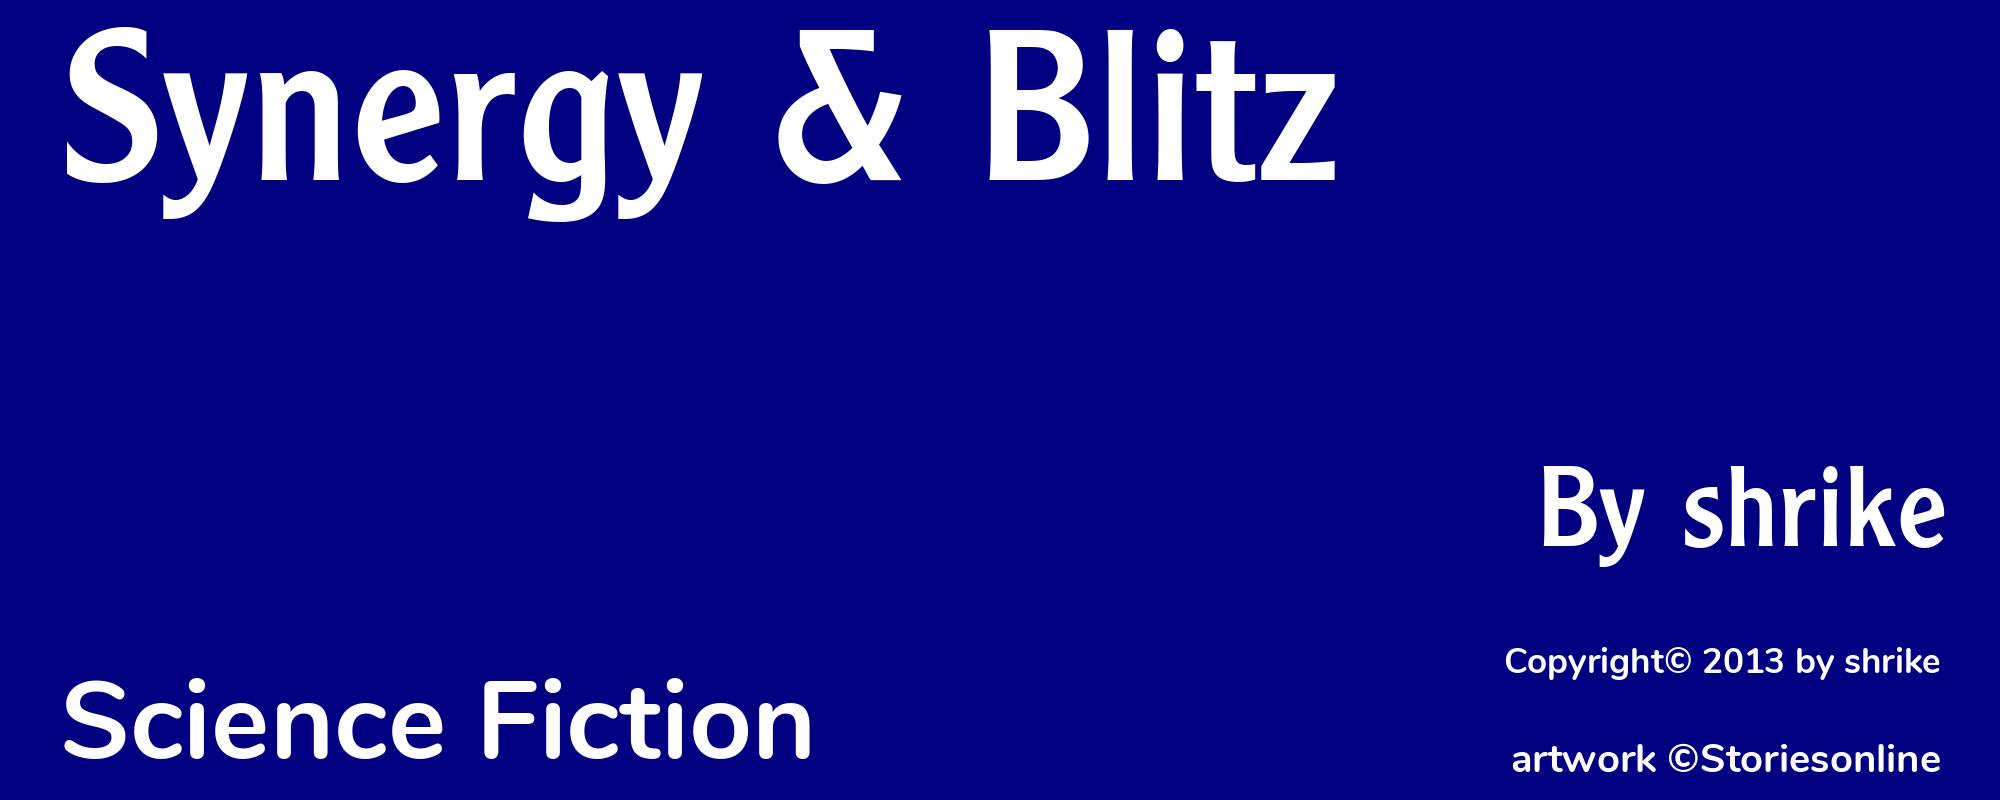 Synergy & Blitz - Cover